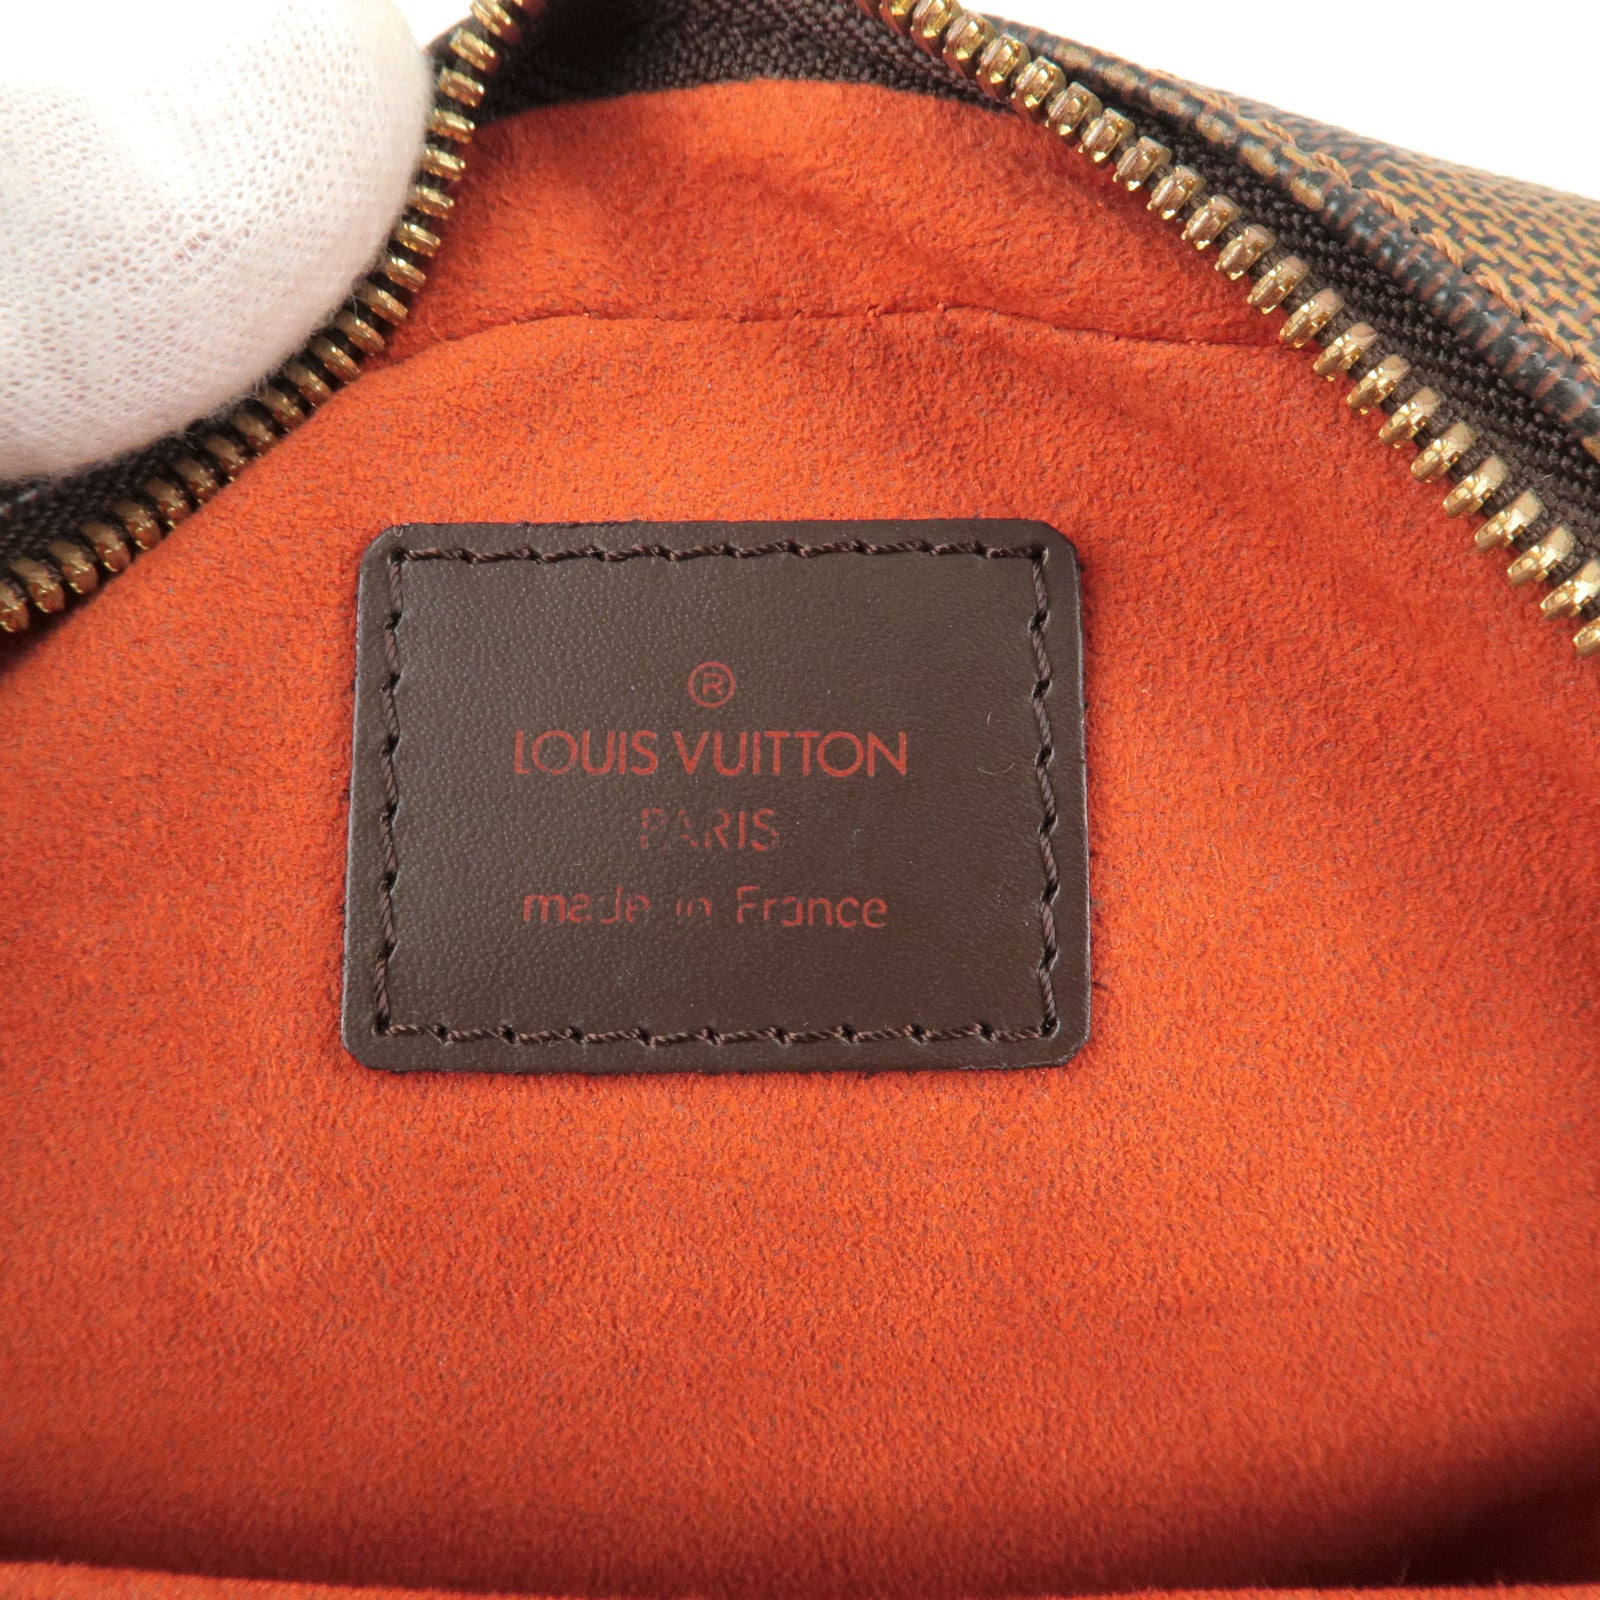 Louis Vuitton Iena MM Damier Ebene Shoulder Bag Brown